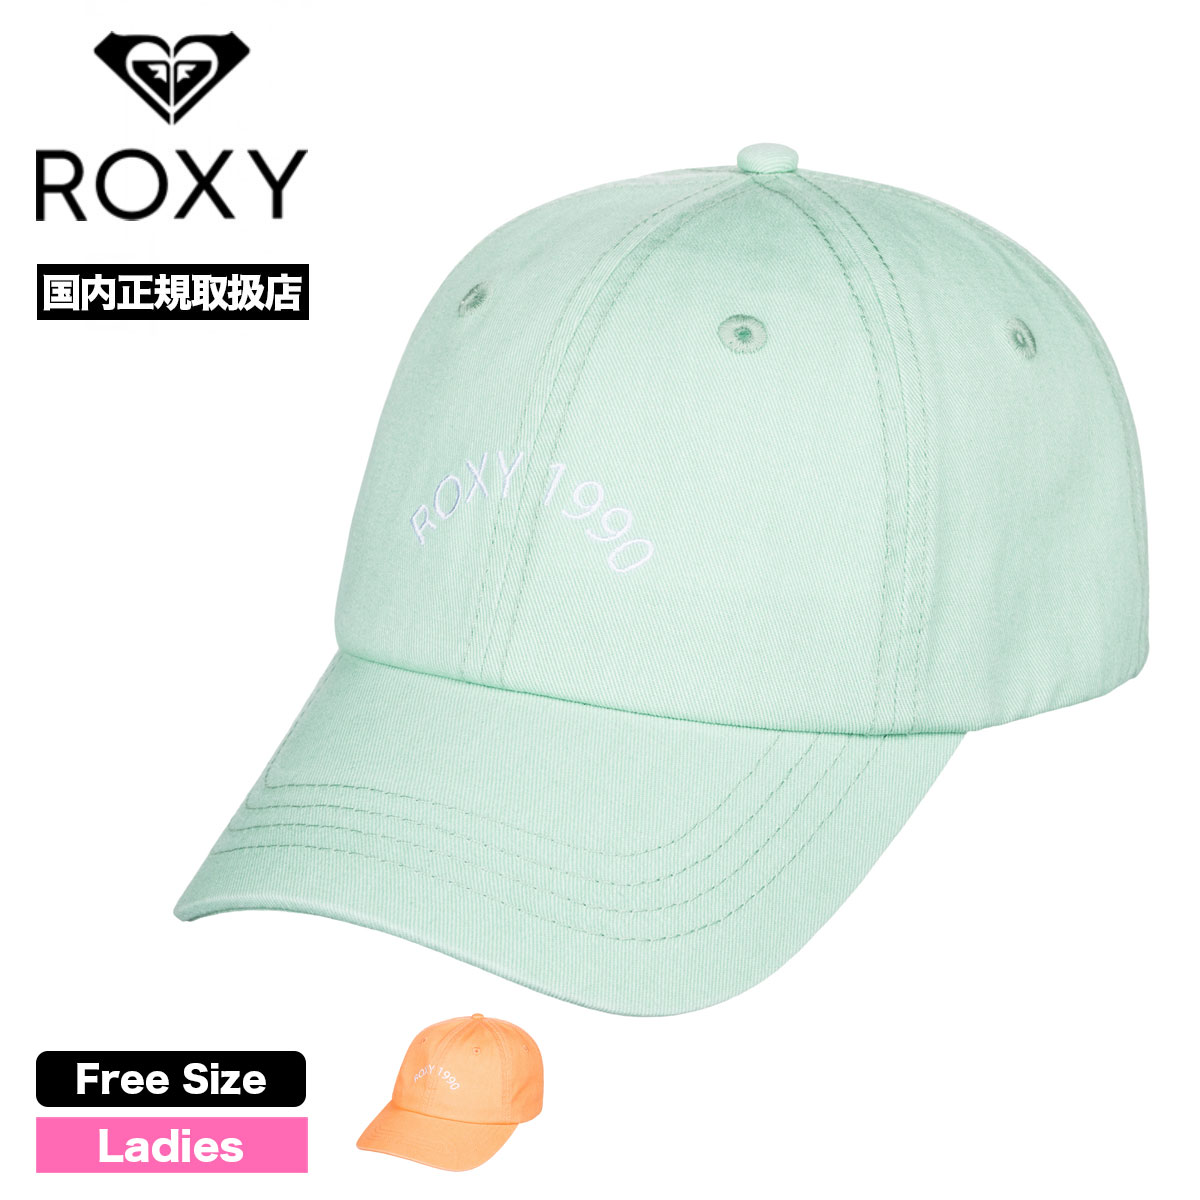 ROXY 帽子 - ハット